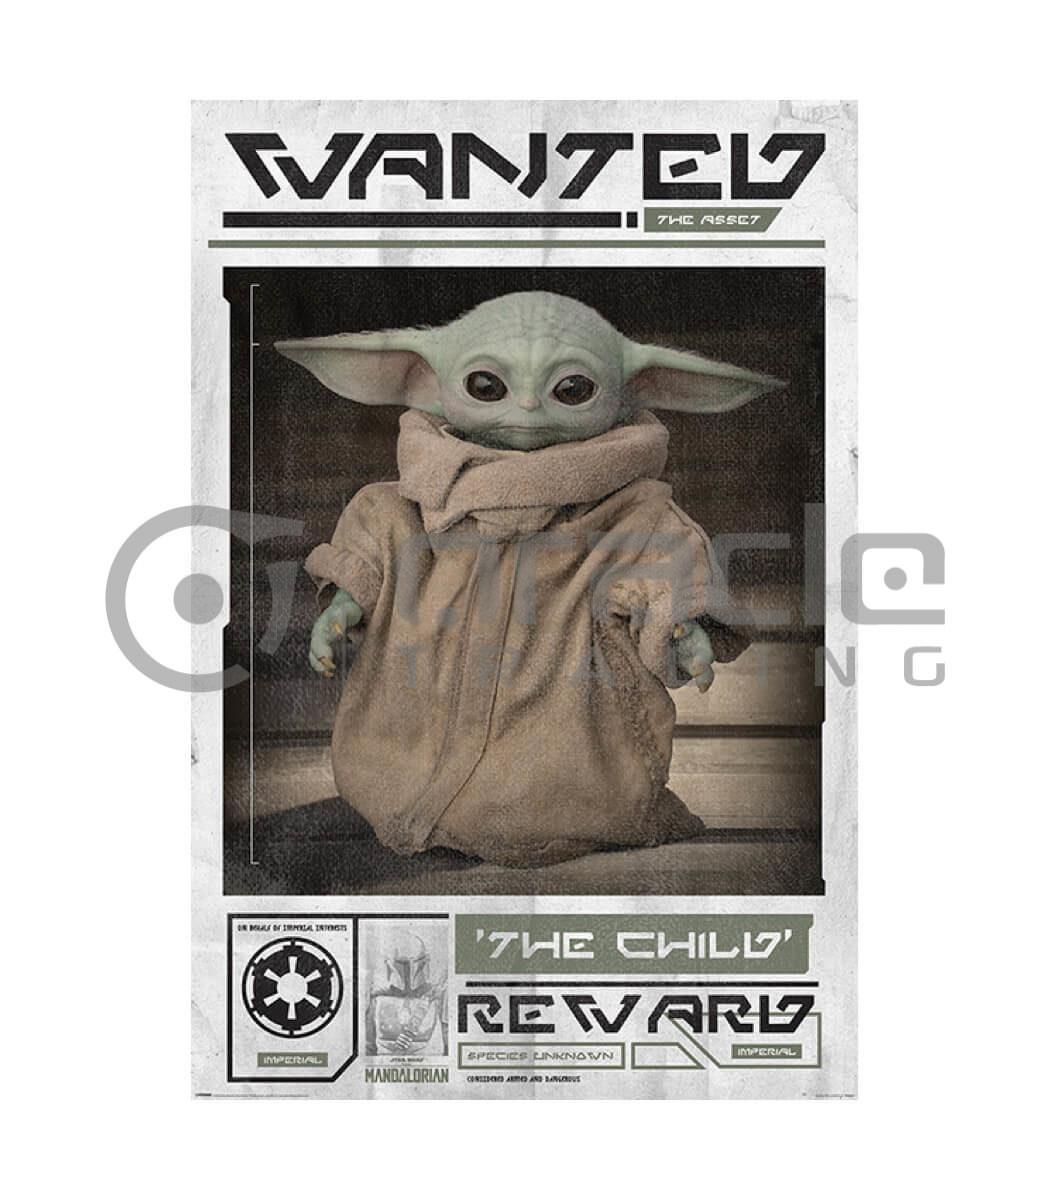 Star Wars: The Mandalorian Poster - Wanted